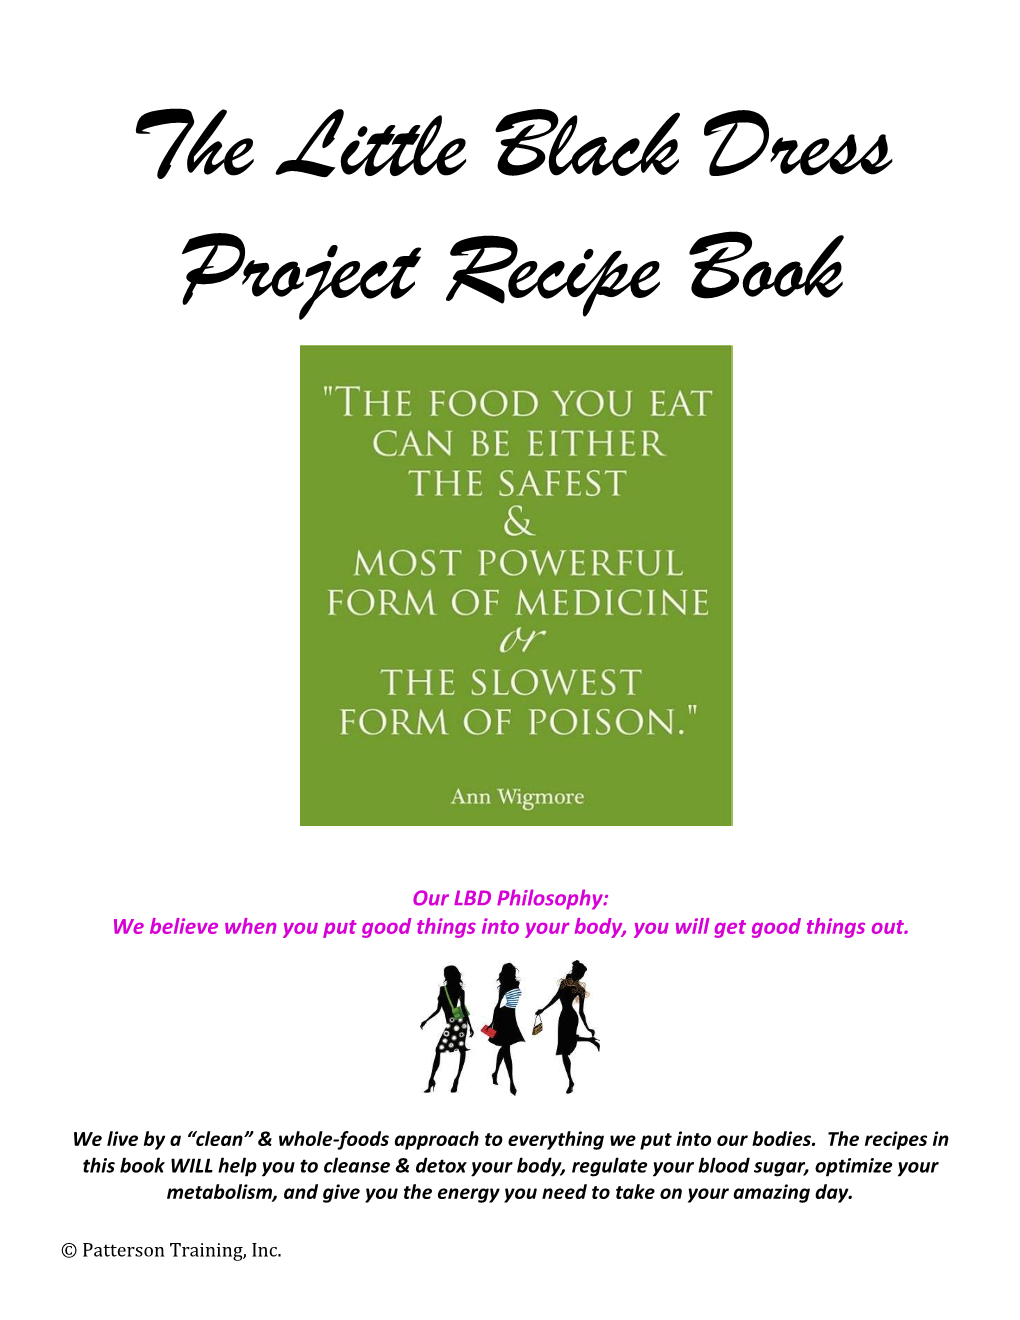 The Little Black Dress Project Recipe Book